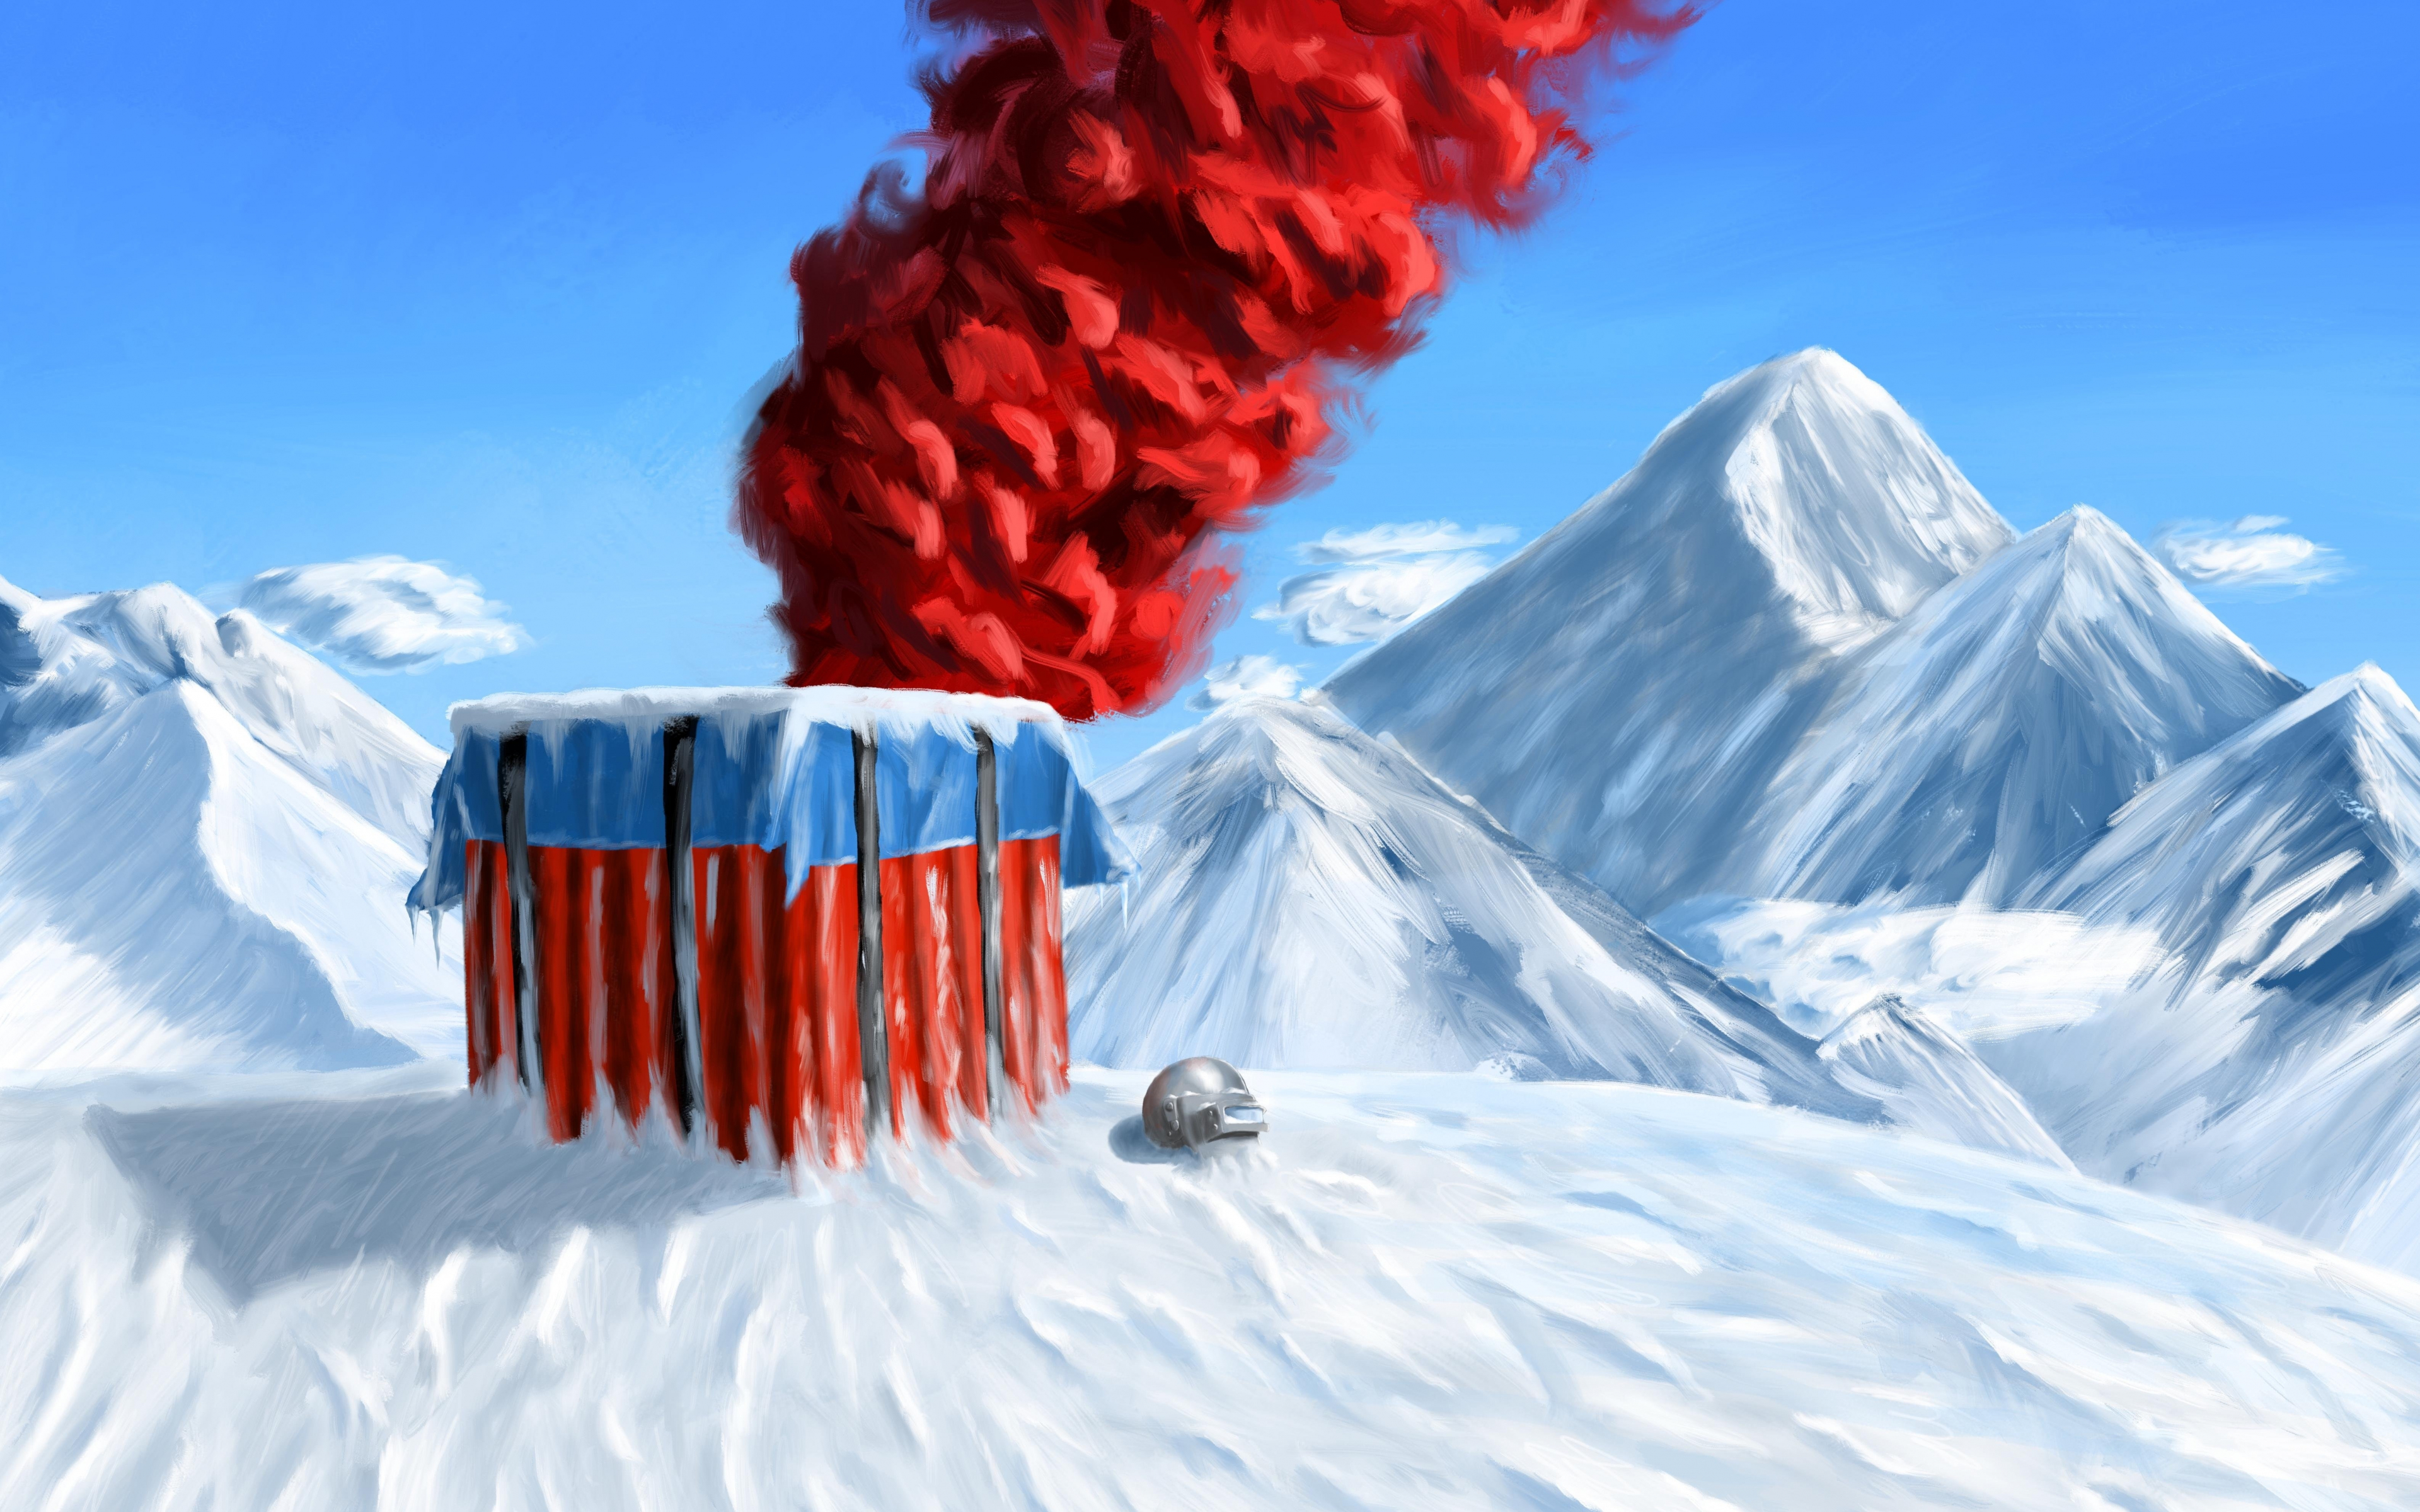 Download 3840x2400 wallpaper  pubg  winter mountains 